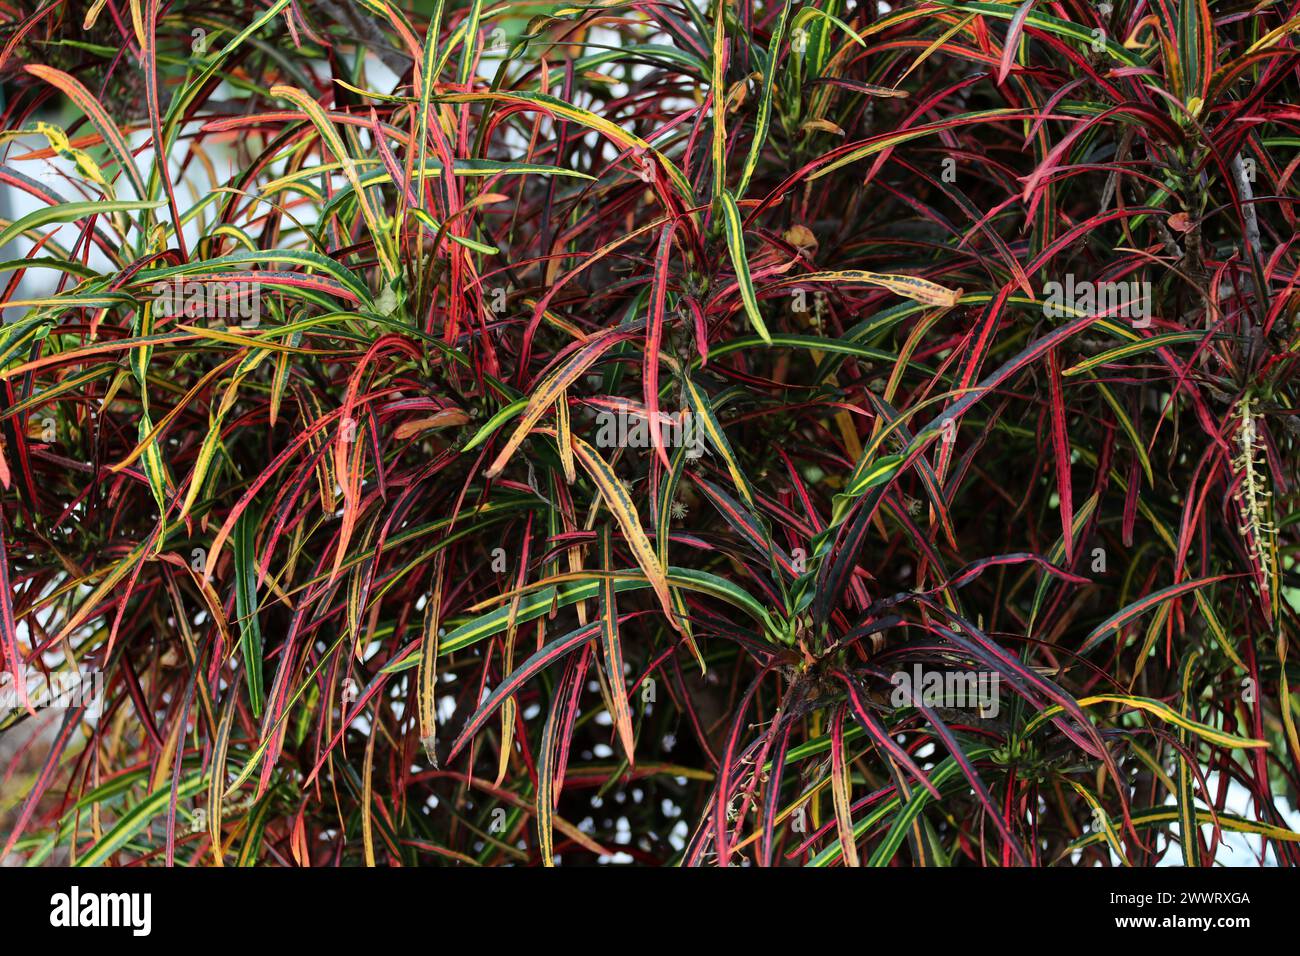 Croton Plant, Codiaeum variegatum, Euphorbiaceae. Tenerife, Canary Islands, Spain. Garden croton occurs naturally in southern Asia. Stock Photo